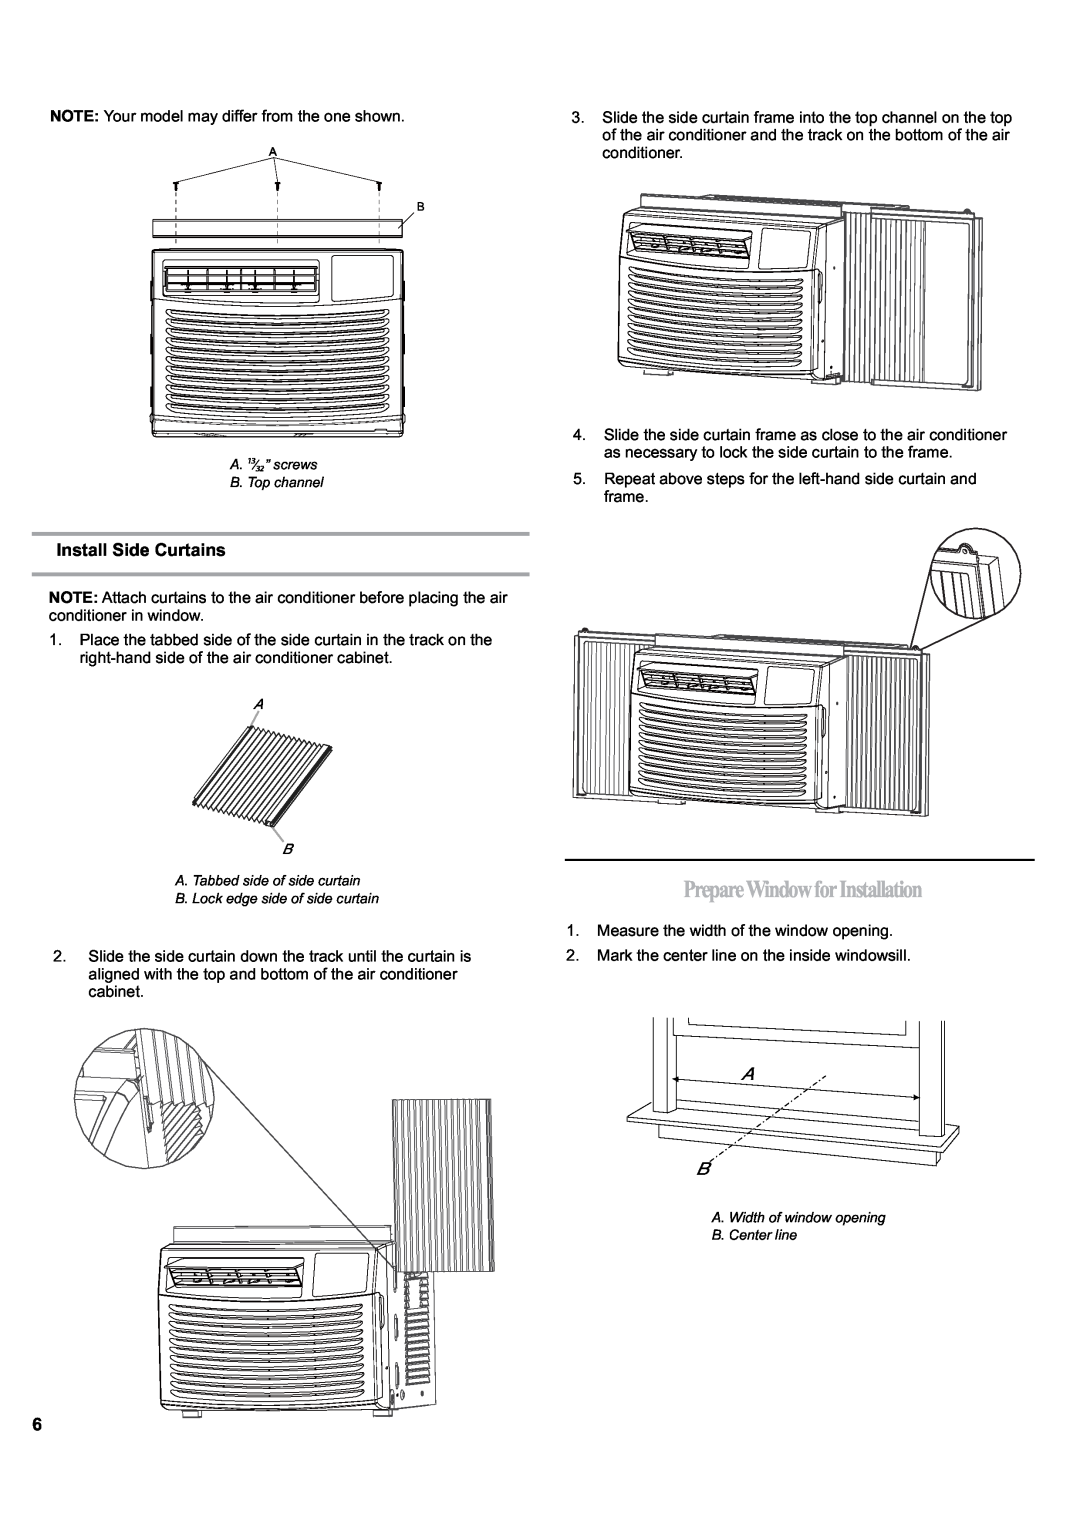 Haier ESA405K manual PrepareWindowforInstallation, Install Side Curtains 